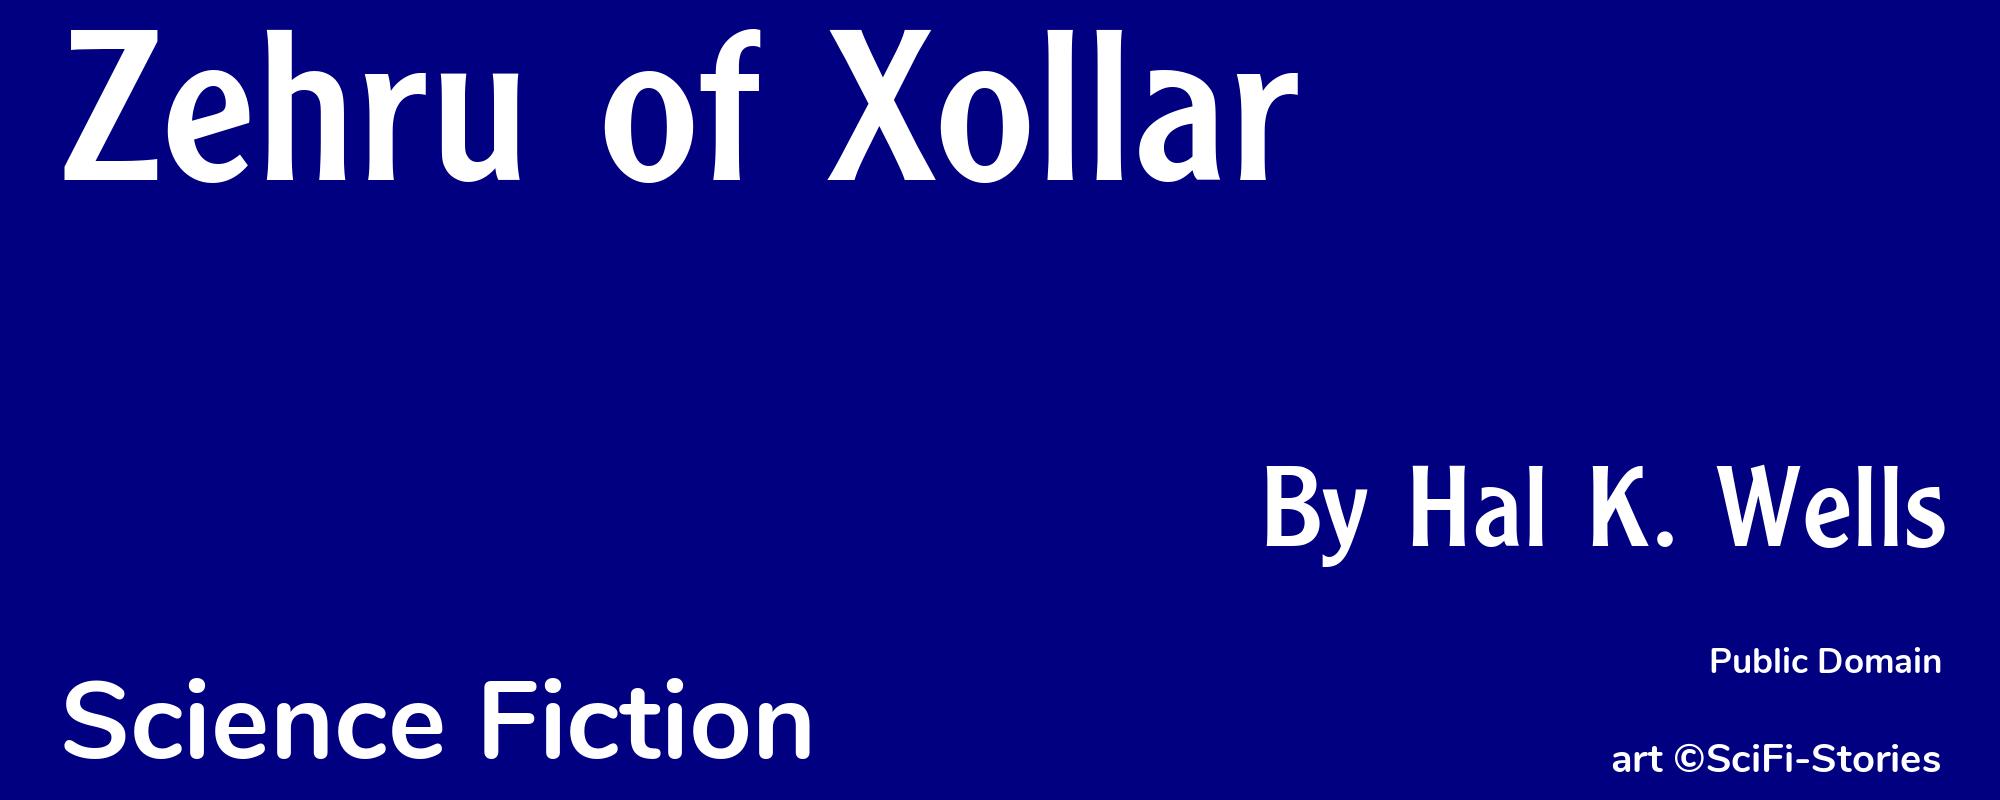 Zehru of Xollar - Cover